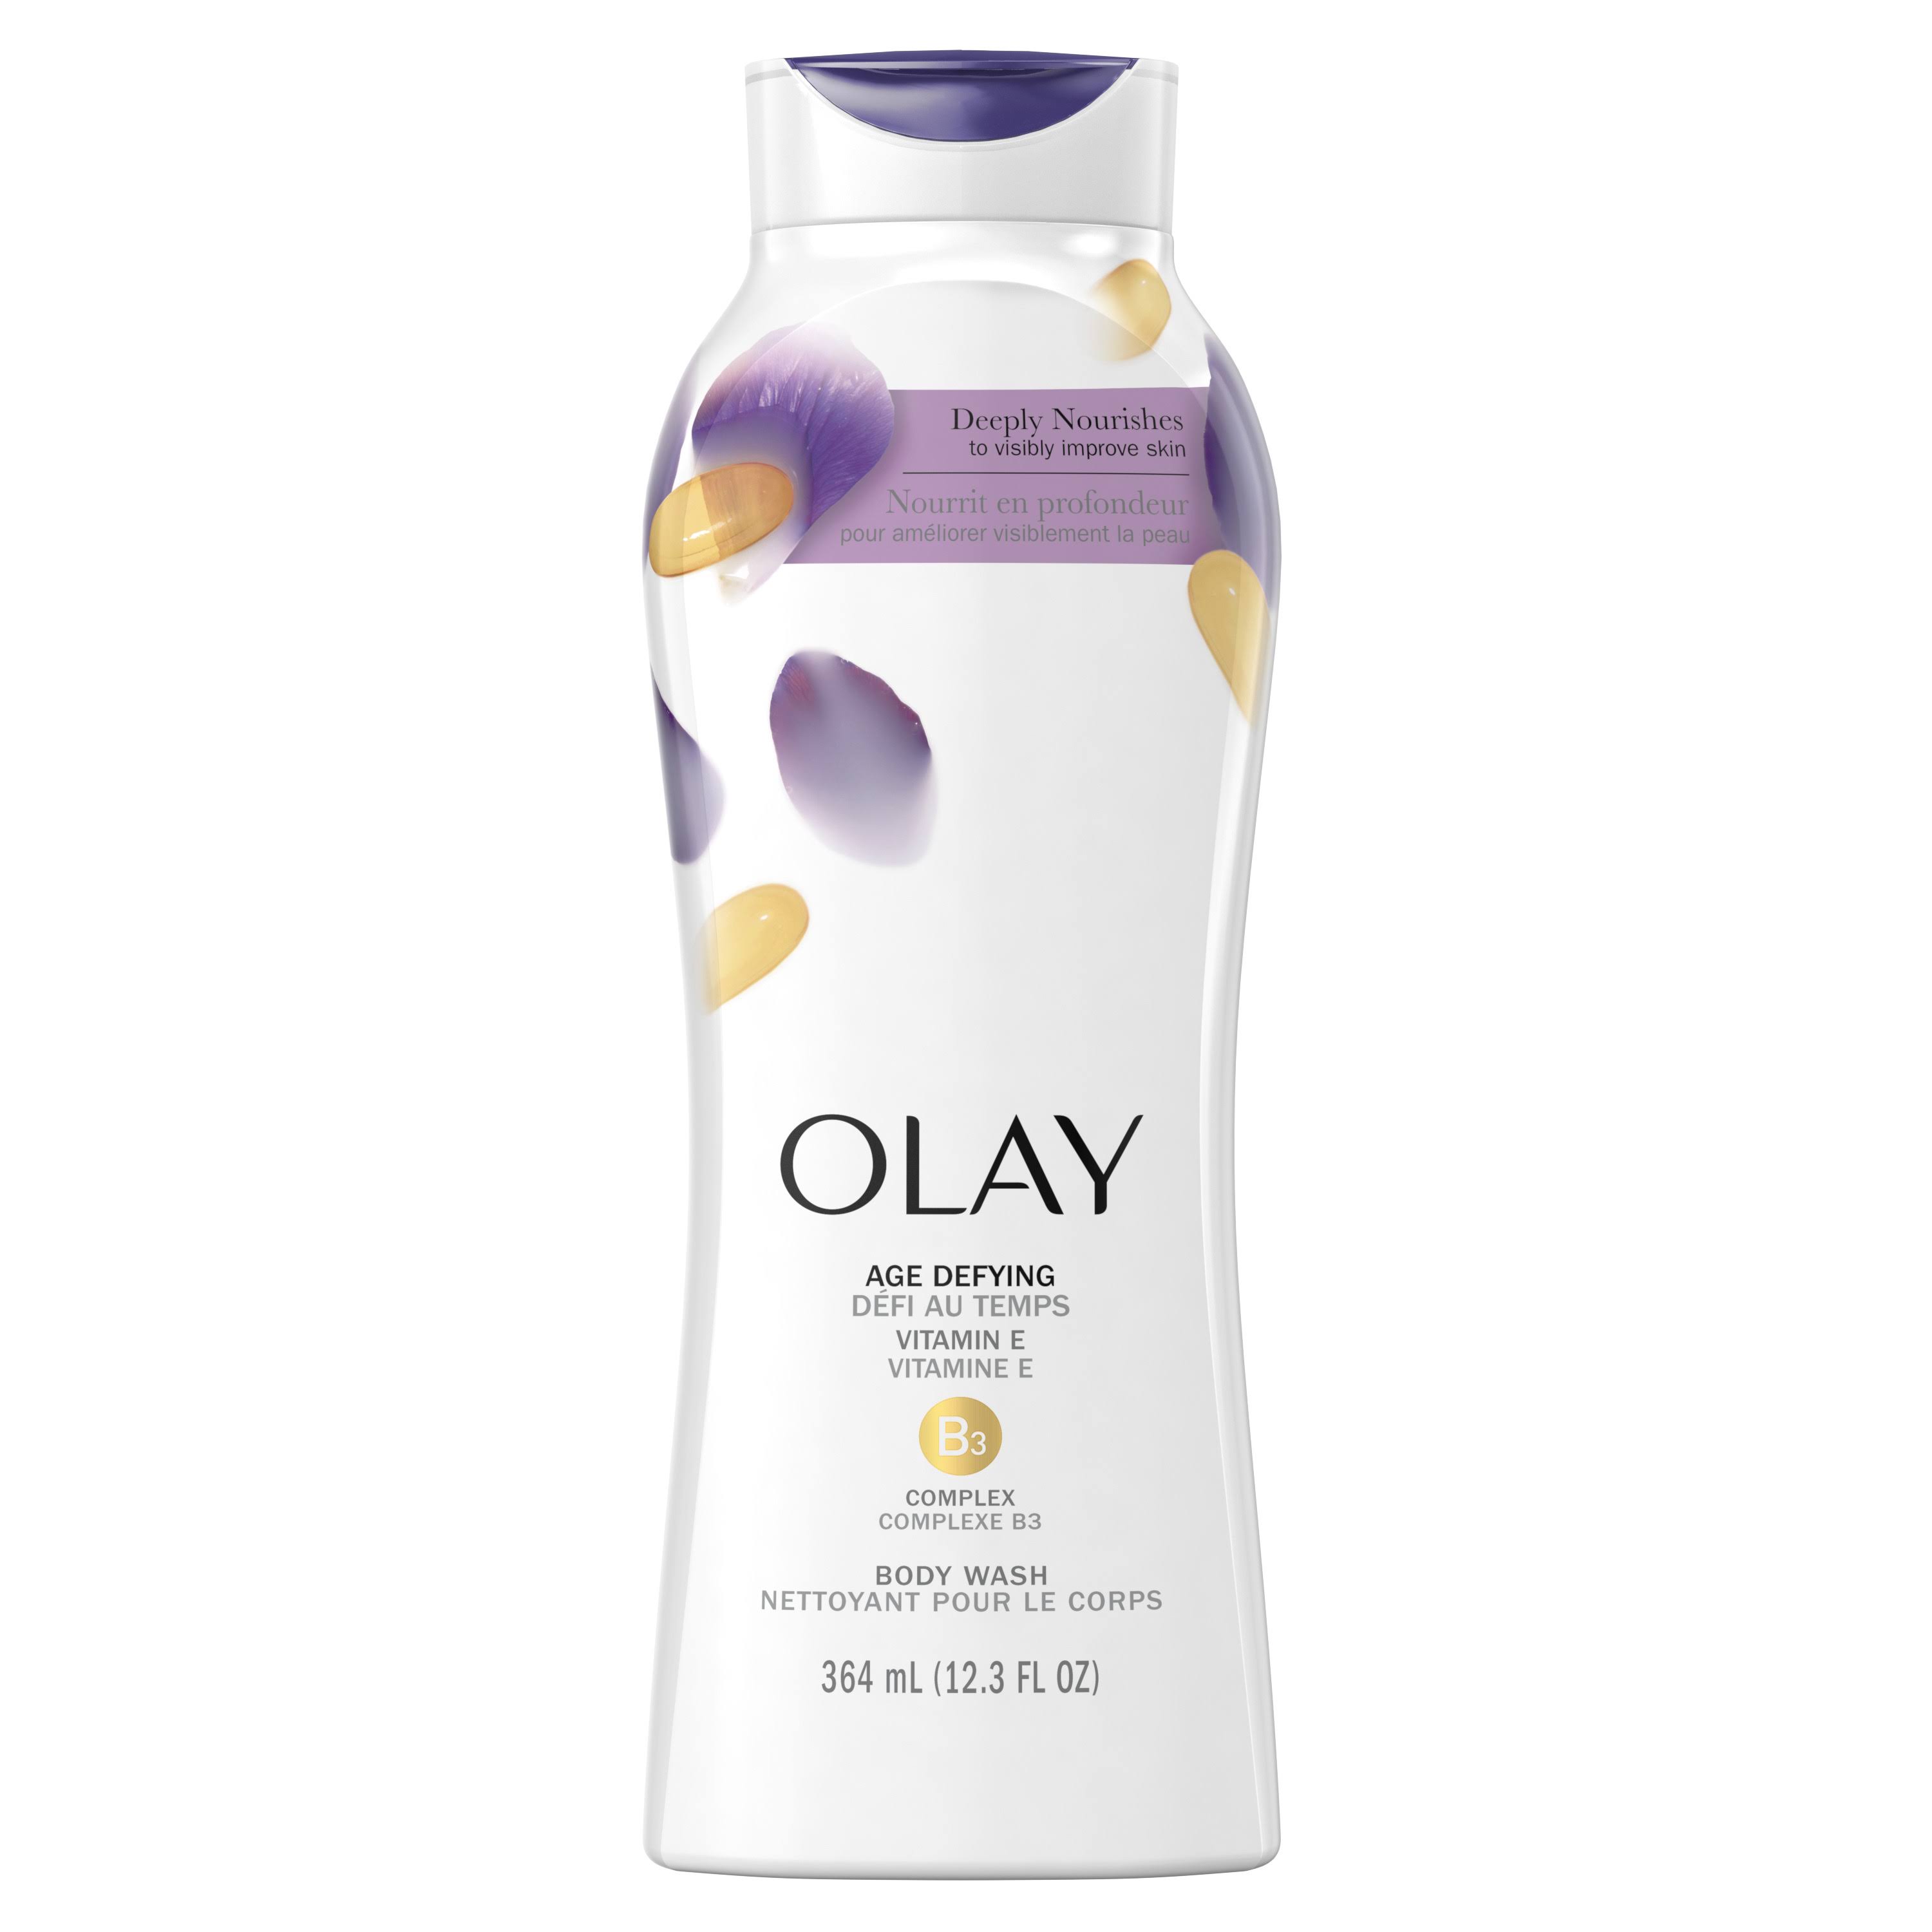 Olay Age Defying Body Wash with Vitamin E, 364 ml